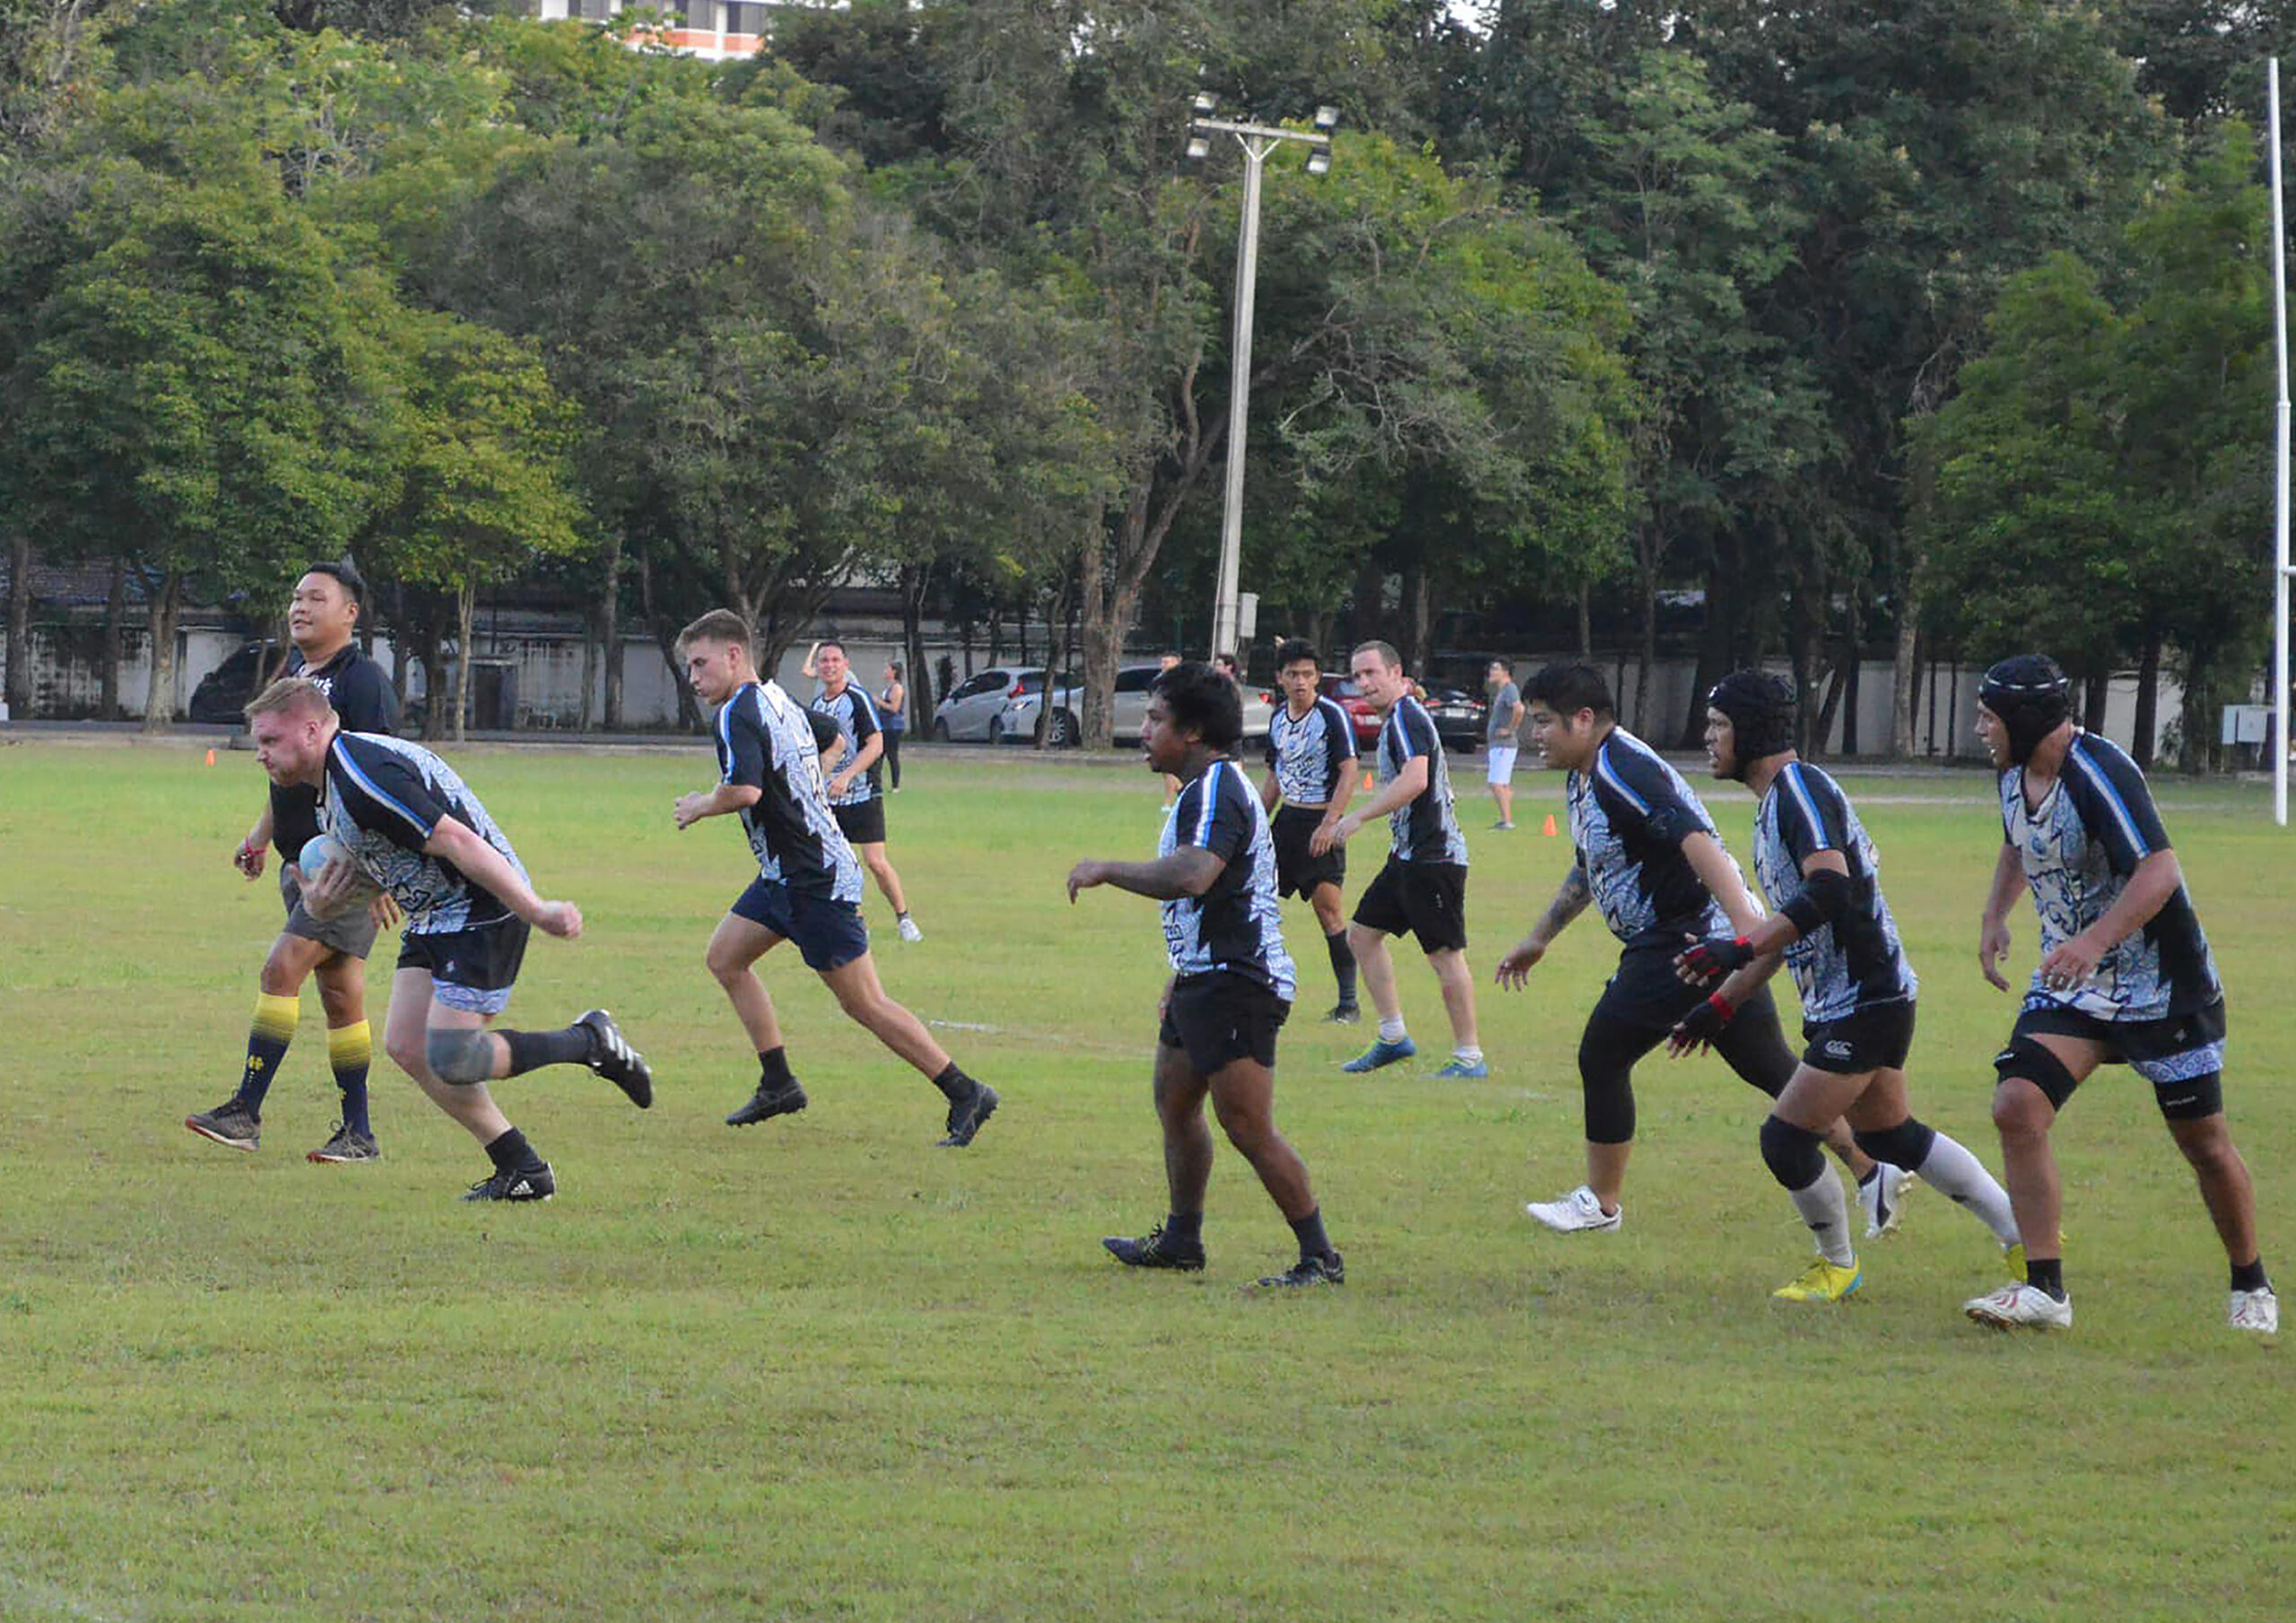 15s squad | Lanna Rugby Club